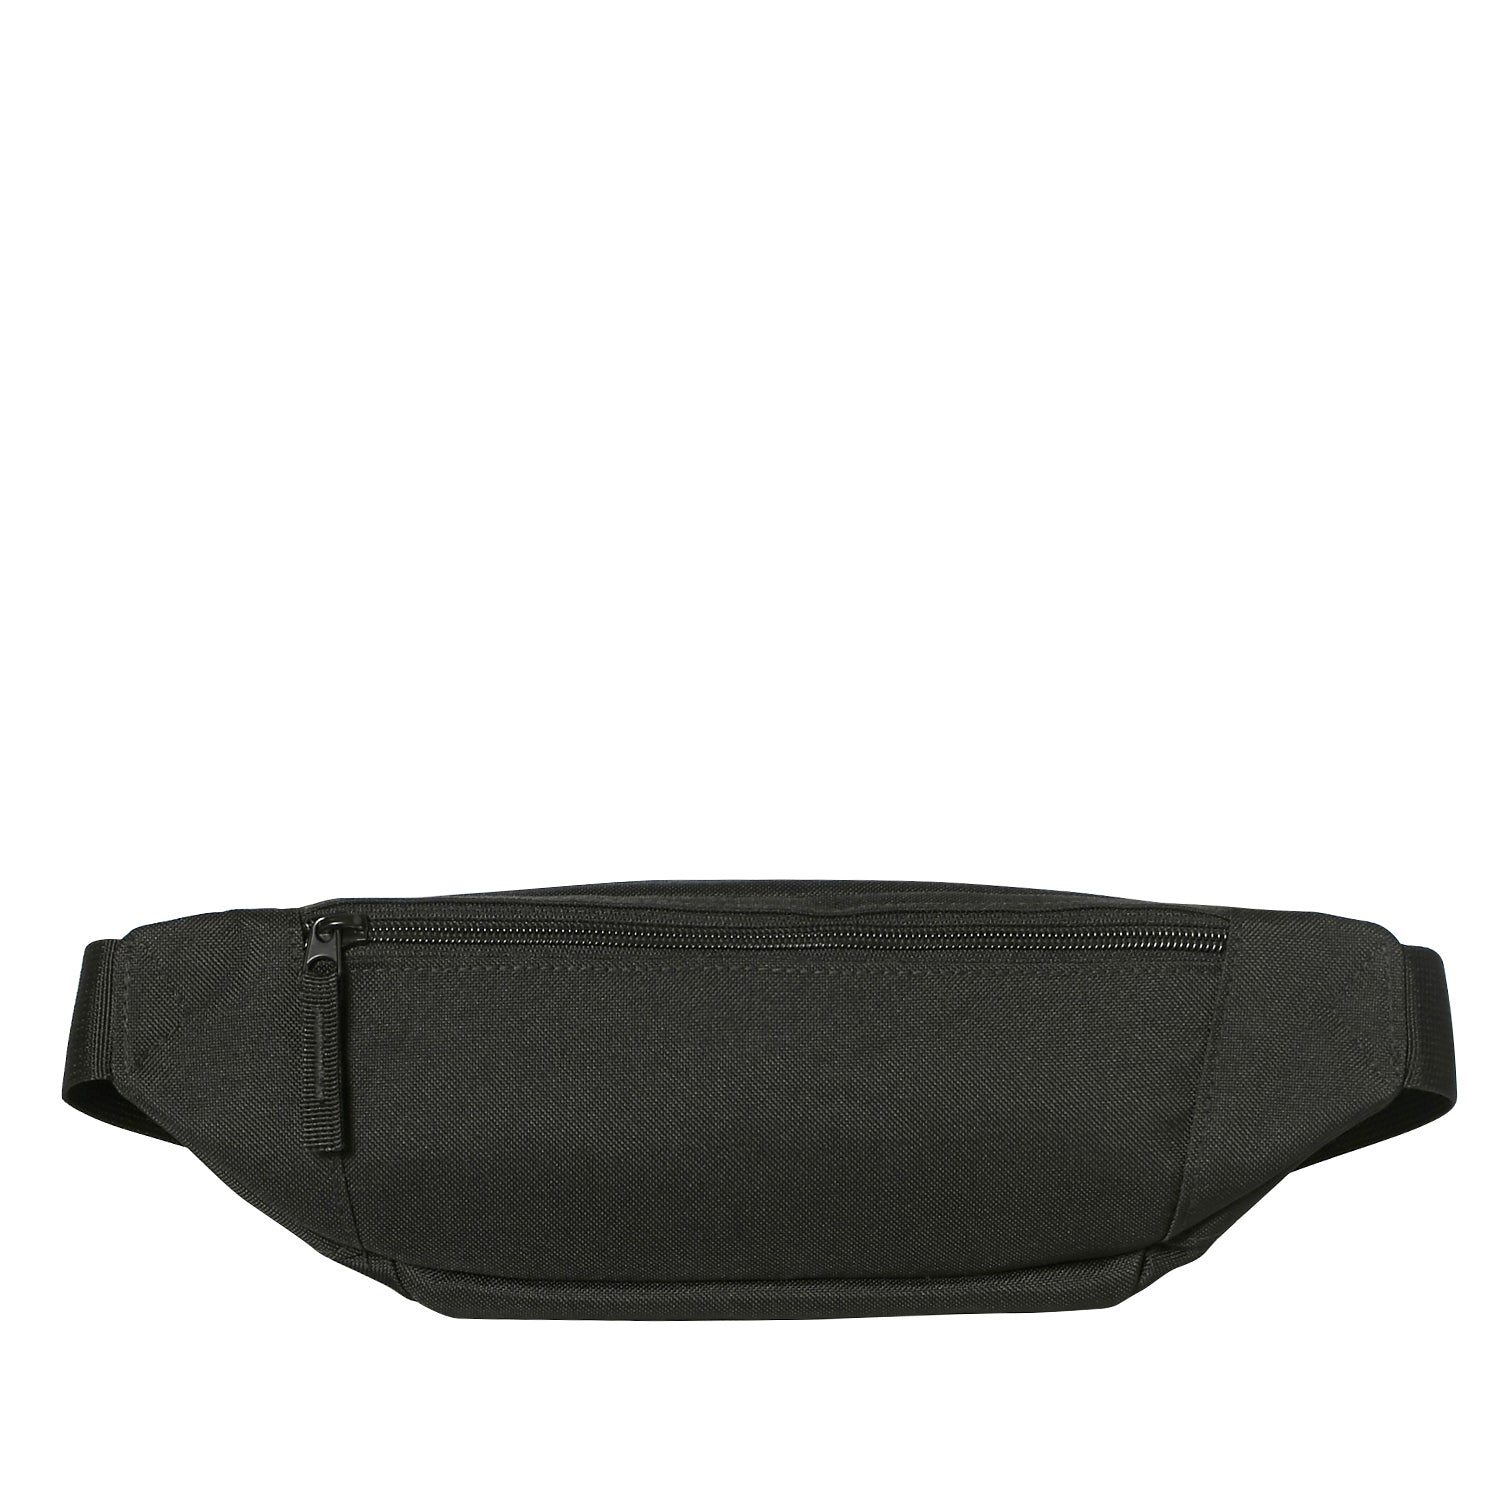 CAT - 83615-01 PROJECT waist bag - Black-2